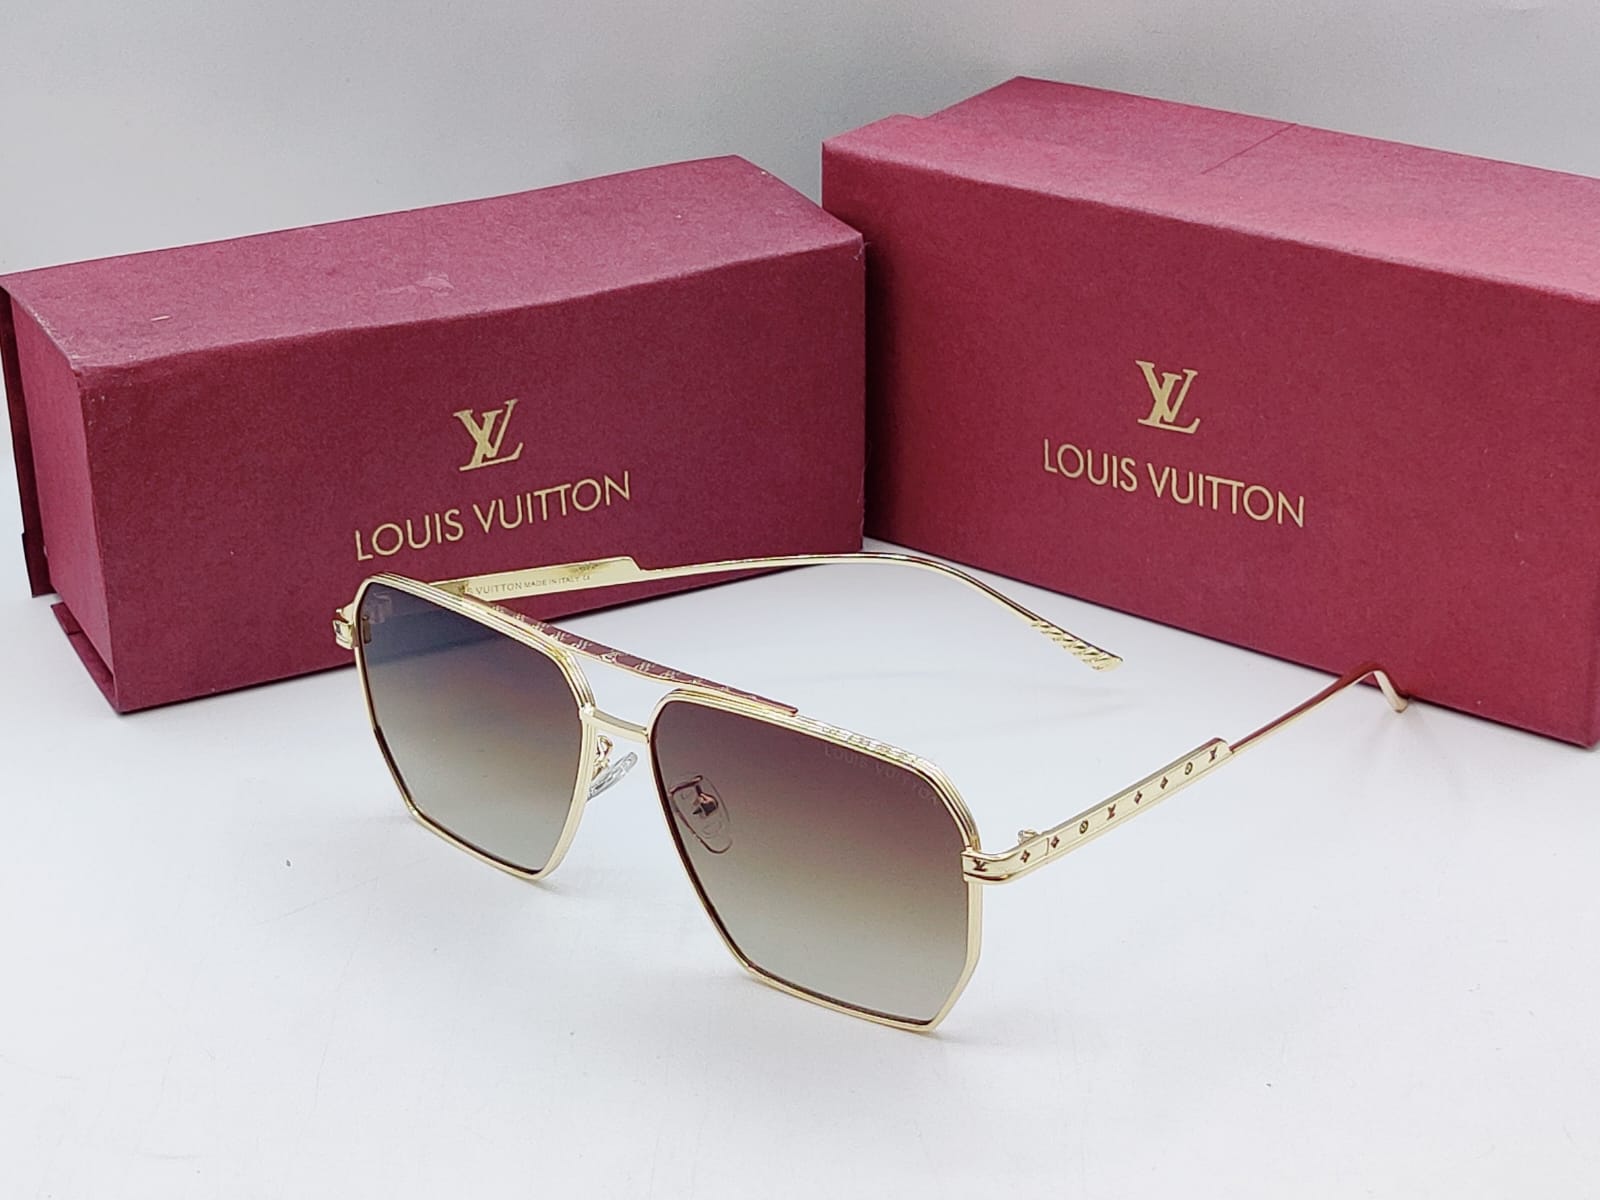 Vampire Allen Solly Scarves Sunglasses - Buy Vampire Allen Solly Scarves  Sunglasses online in India